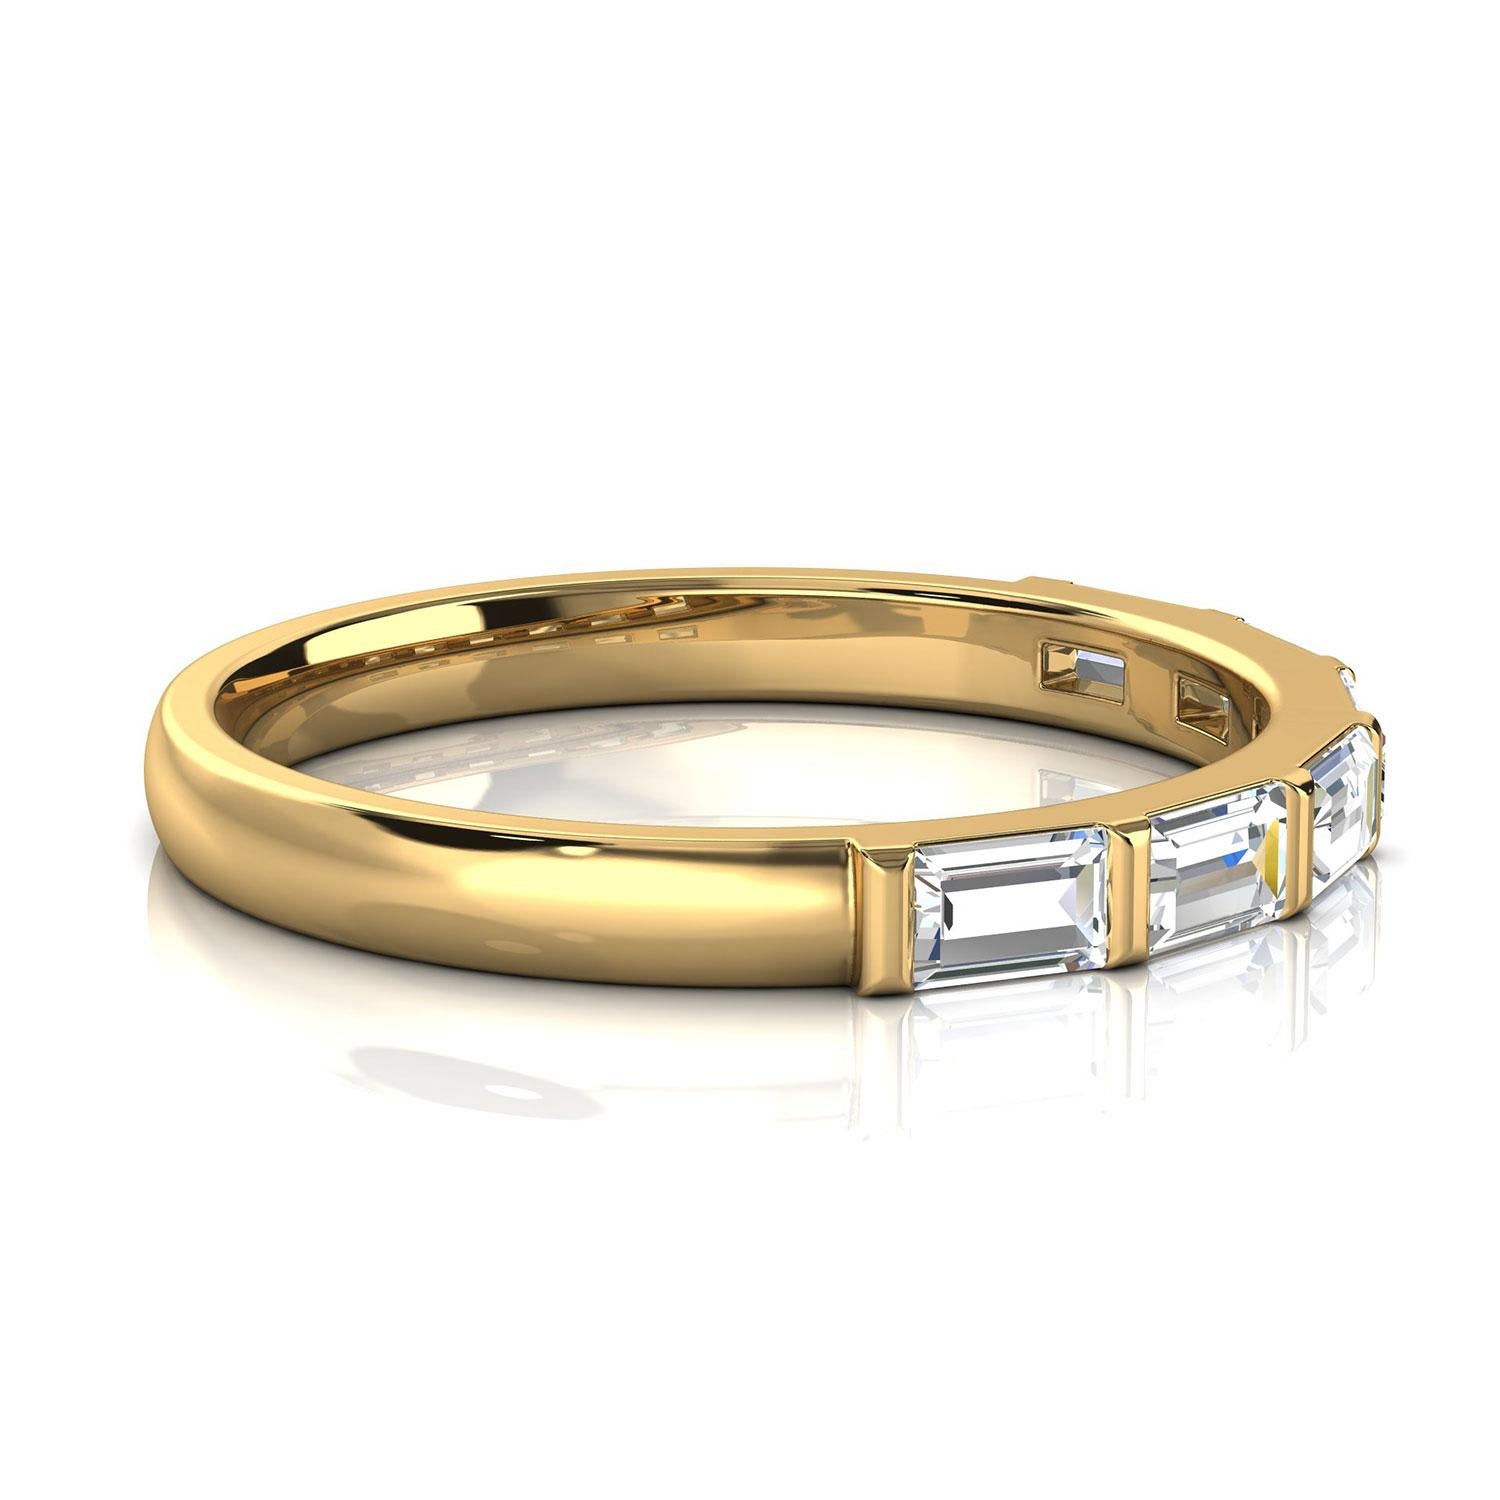 Baguette Cut 14k Yellow Gold Lindie Baguette Organic Design Diamond Ring '1/2 Ct. Tw' For Sale